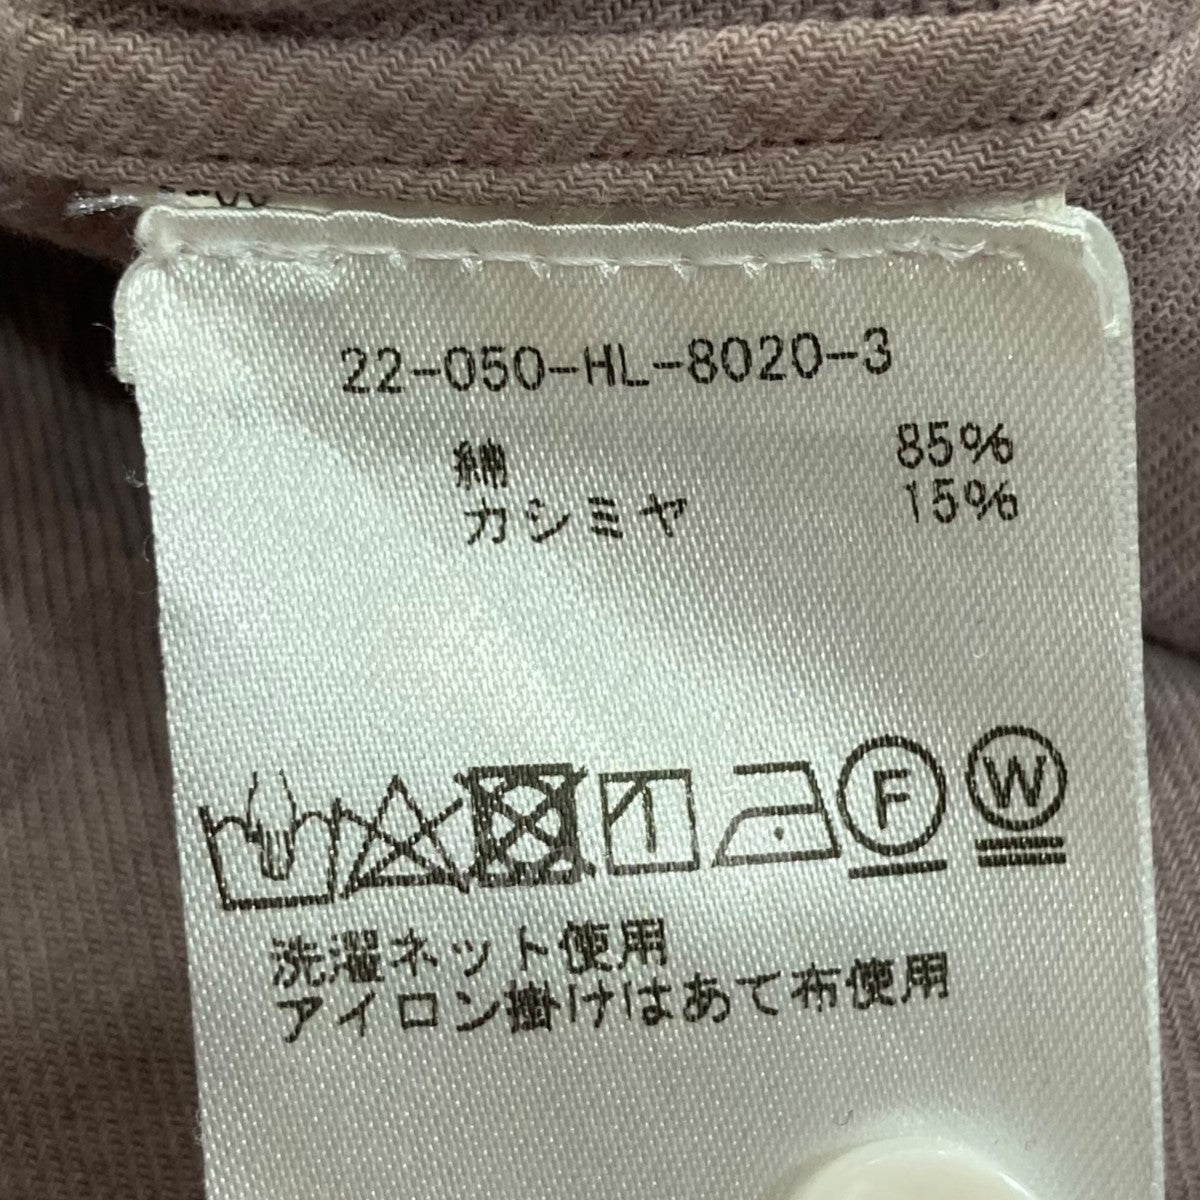 CottonCashmere Shirts コットンカシミヤシャツ 22-050-HL-8020-3